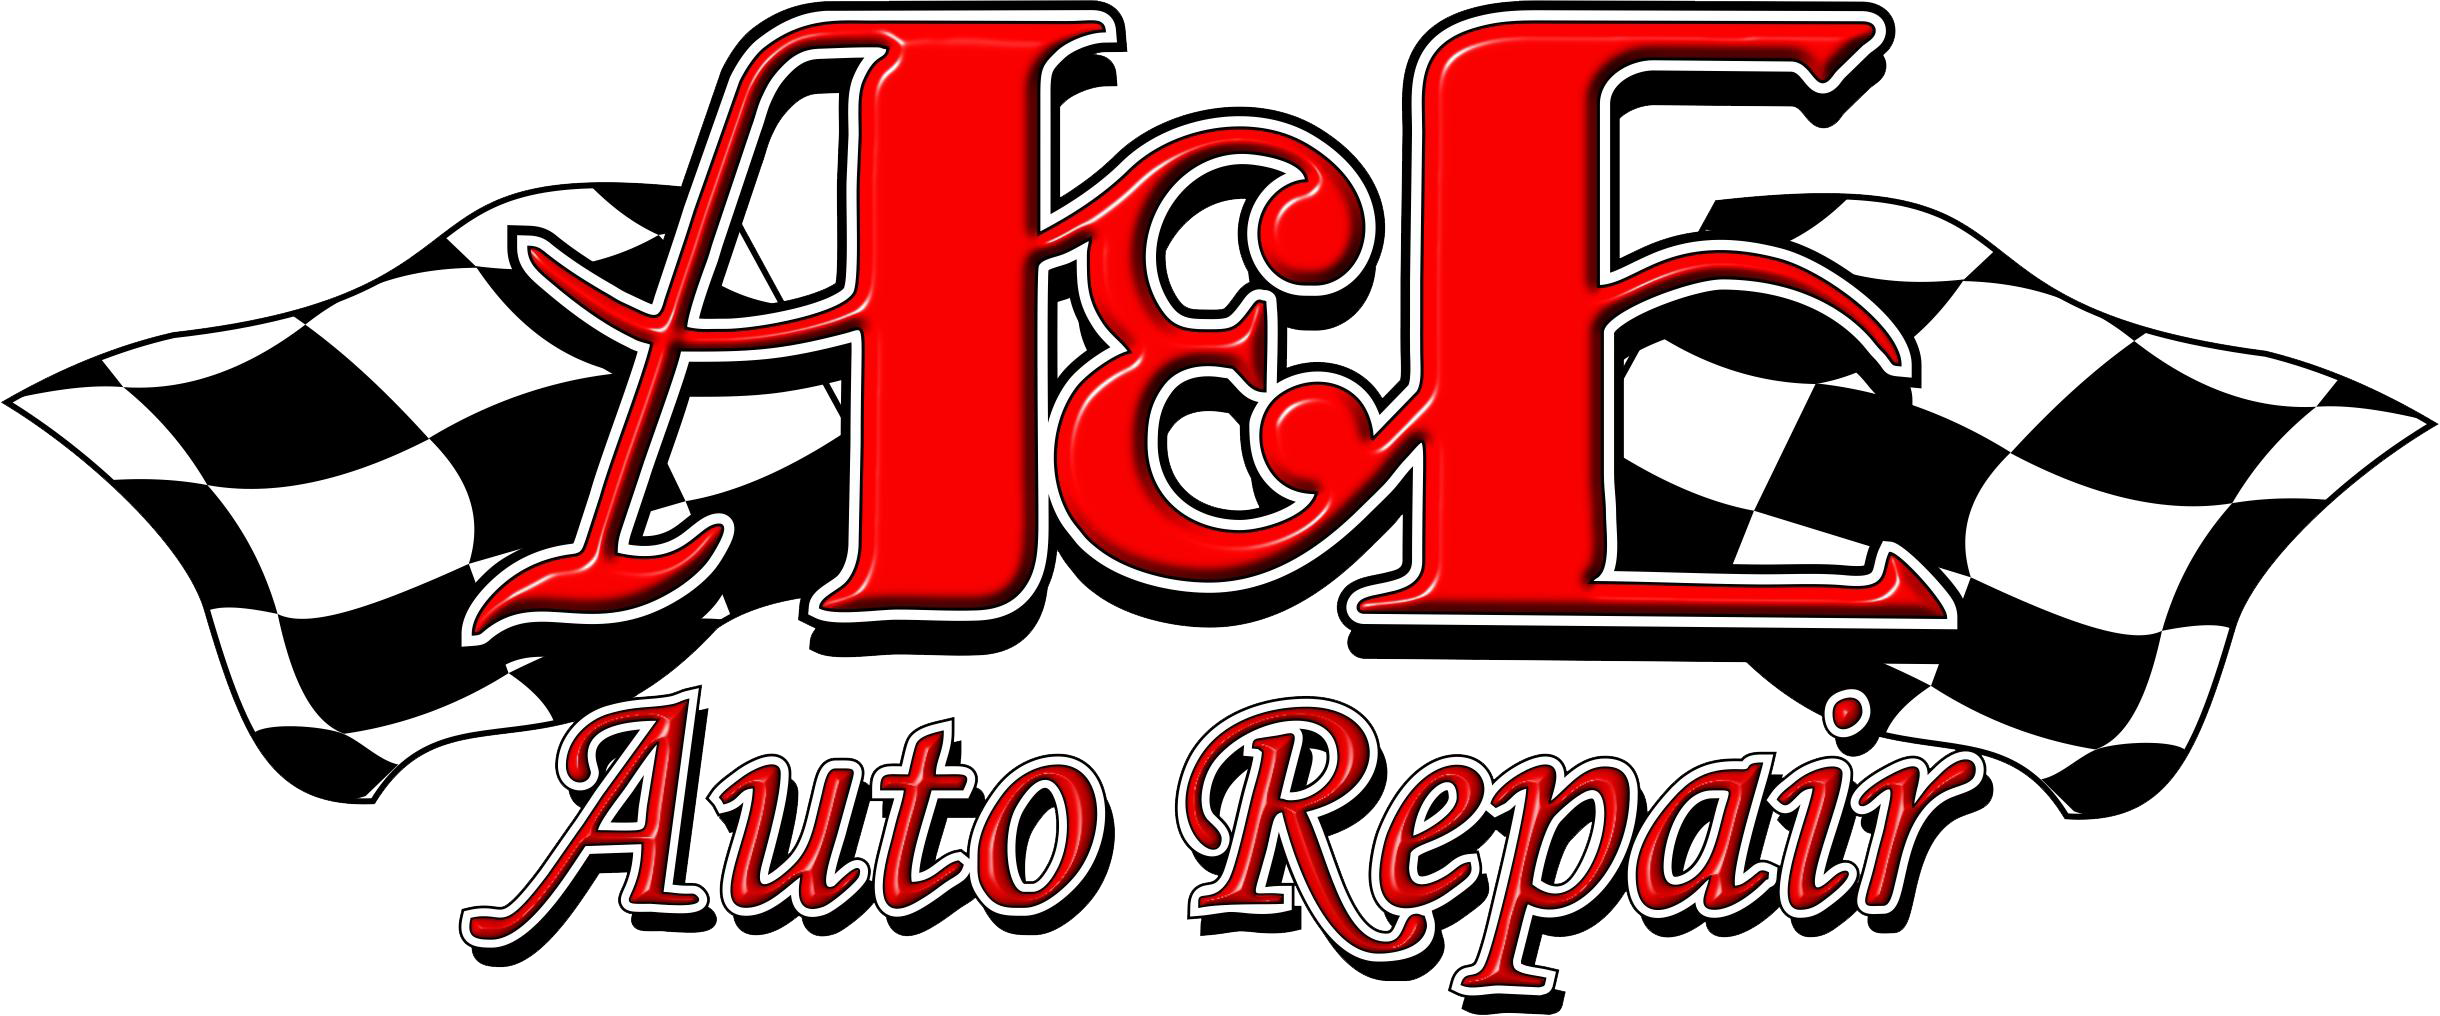 Logo Logo - A & E Auto Repair (2440x1016)